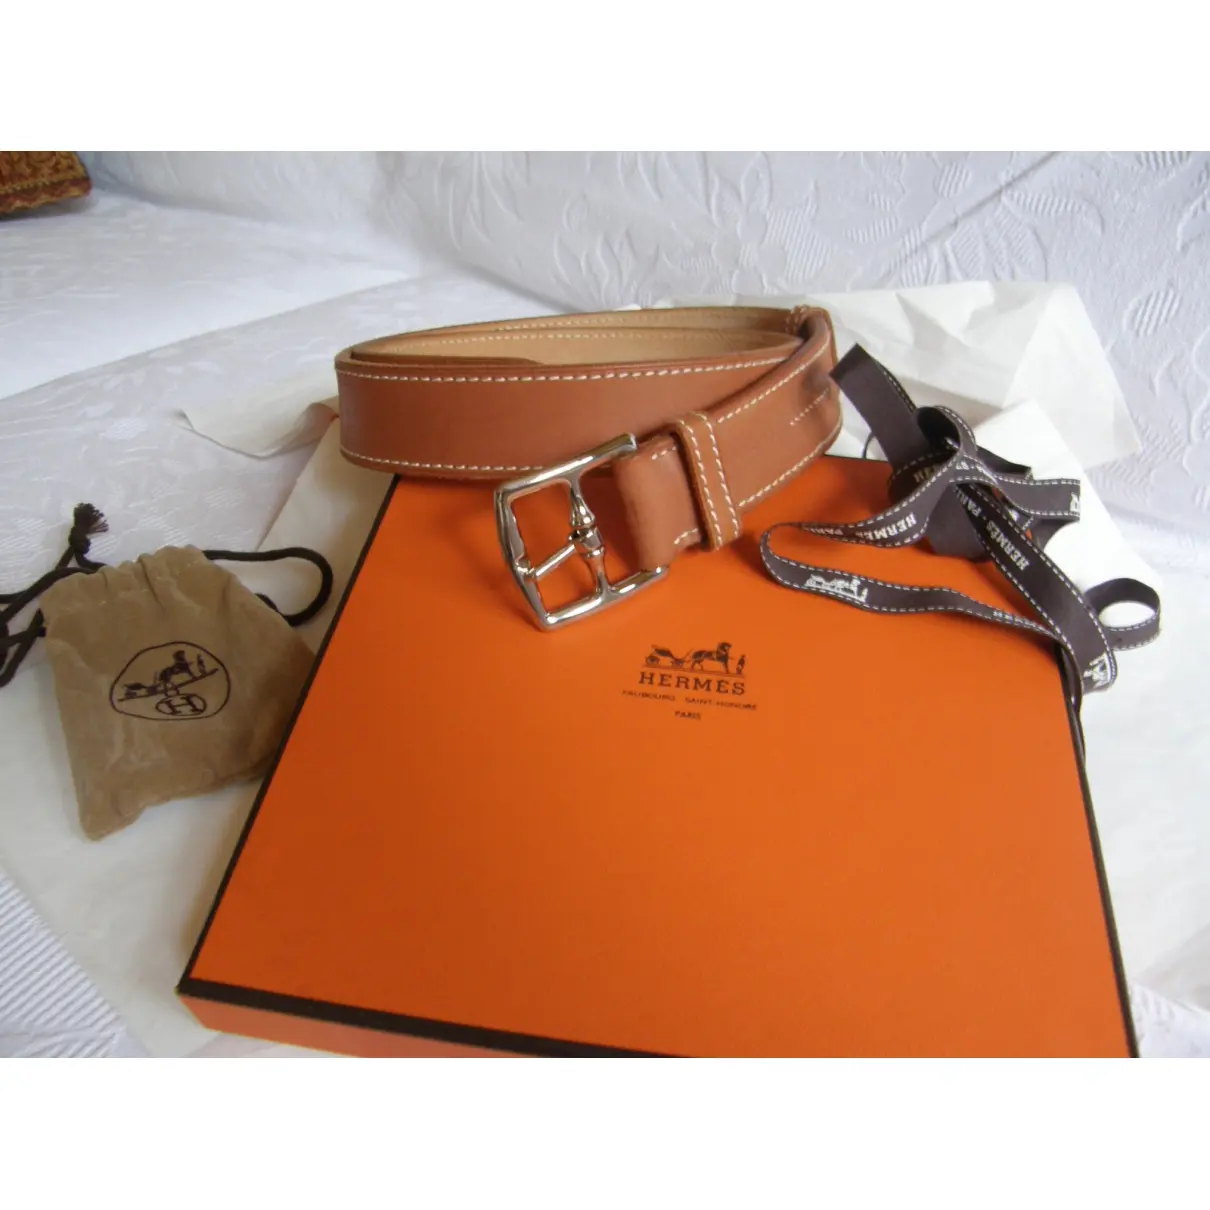 Brown Leather Belt Hermès